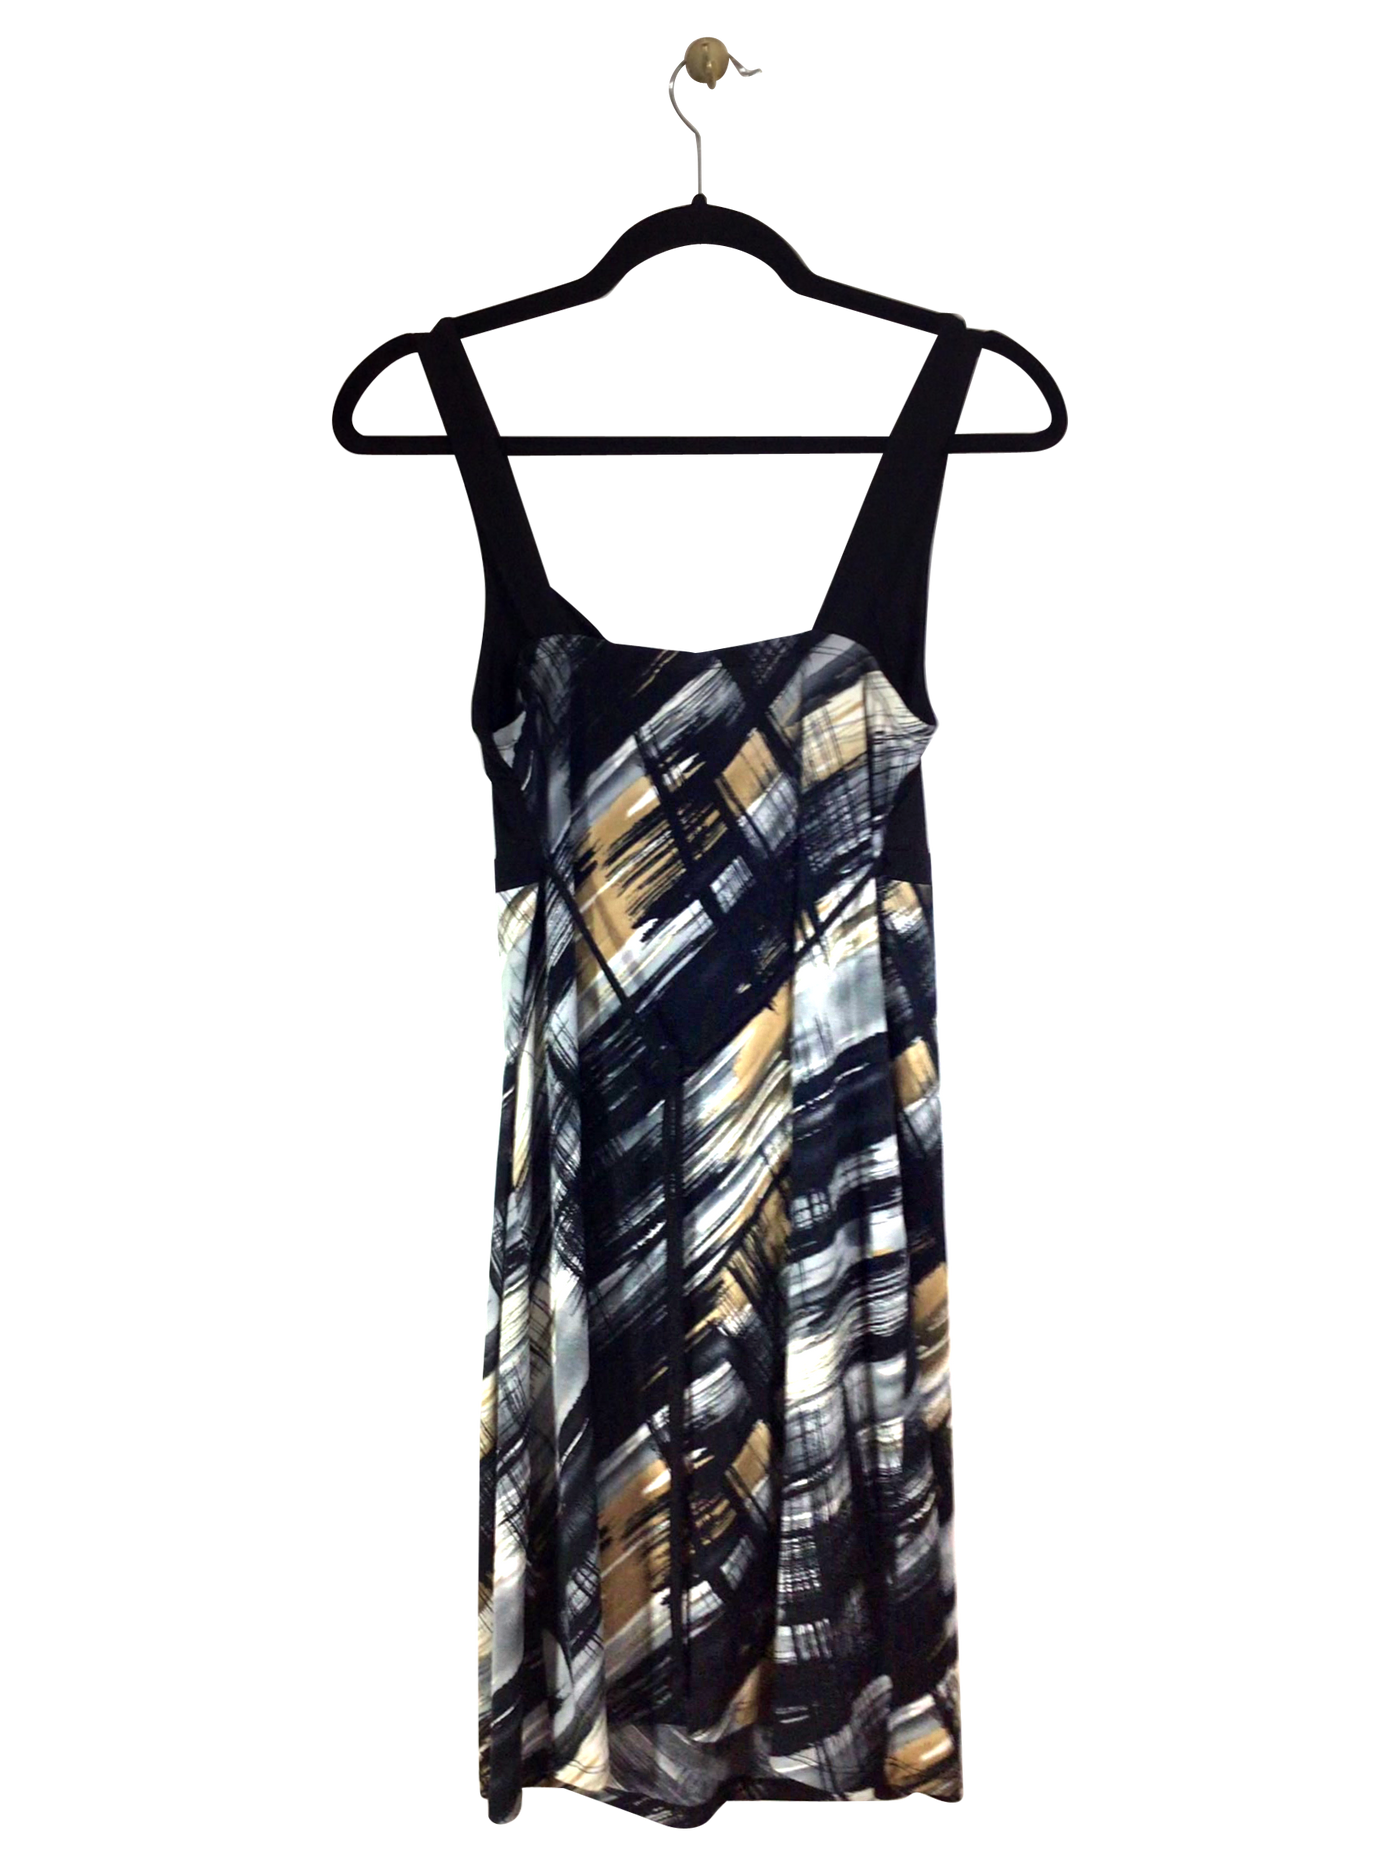 SUZY SHIER Maxi Dress Regular fit in Black - Size M | 13.25 $ KOOP